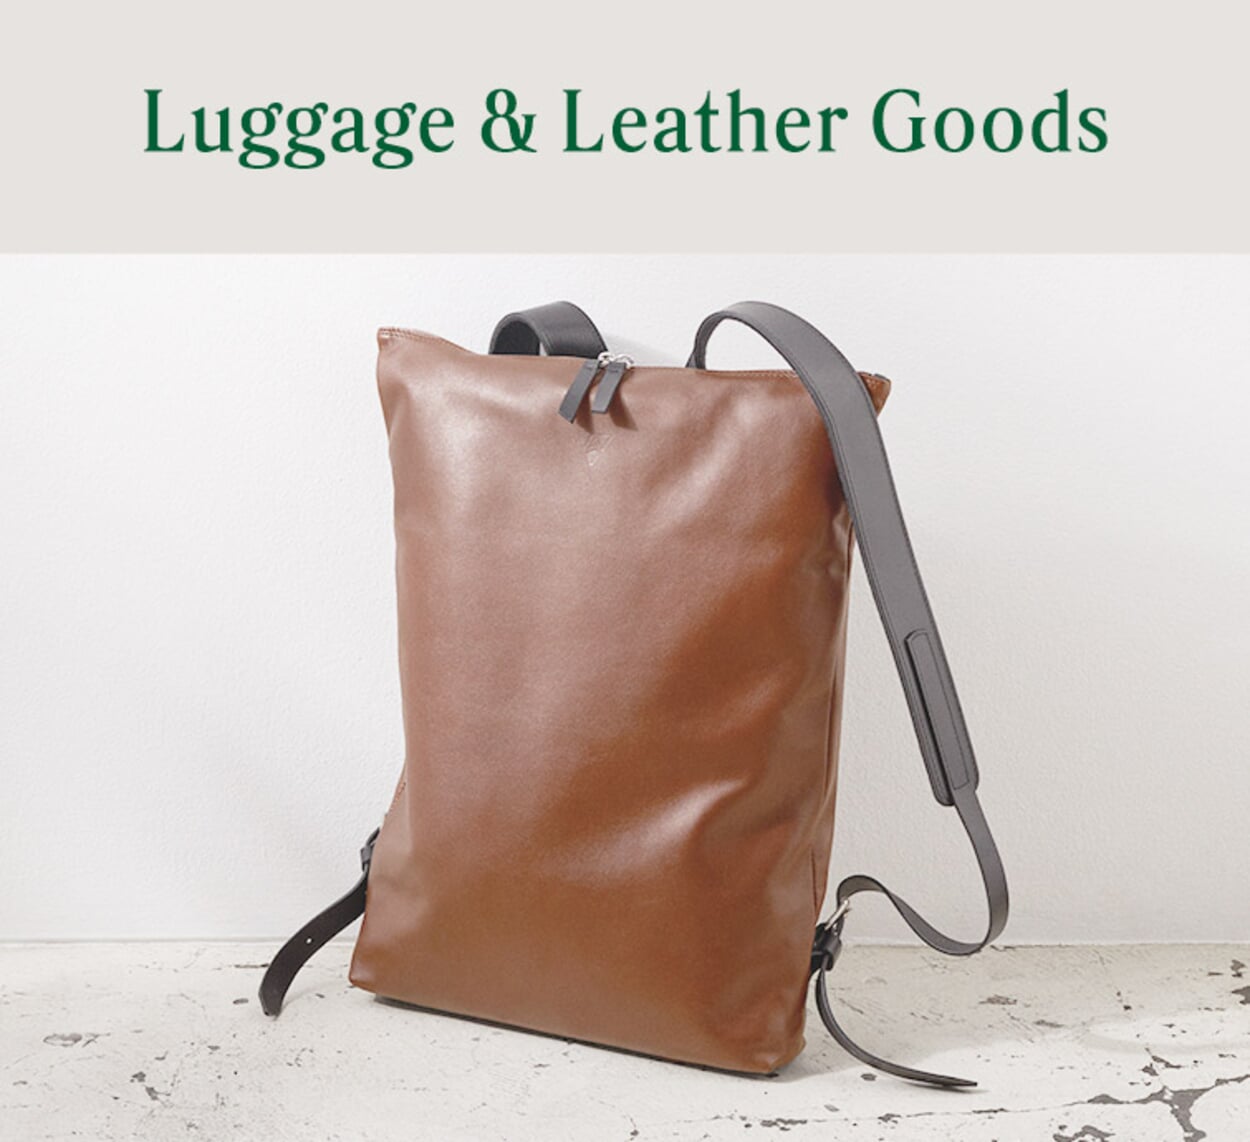 Luggage & Leather Goods